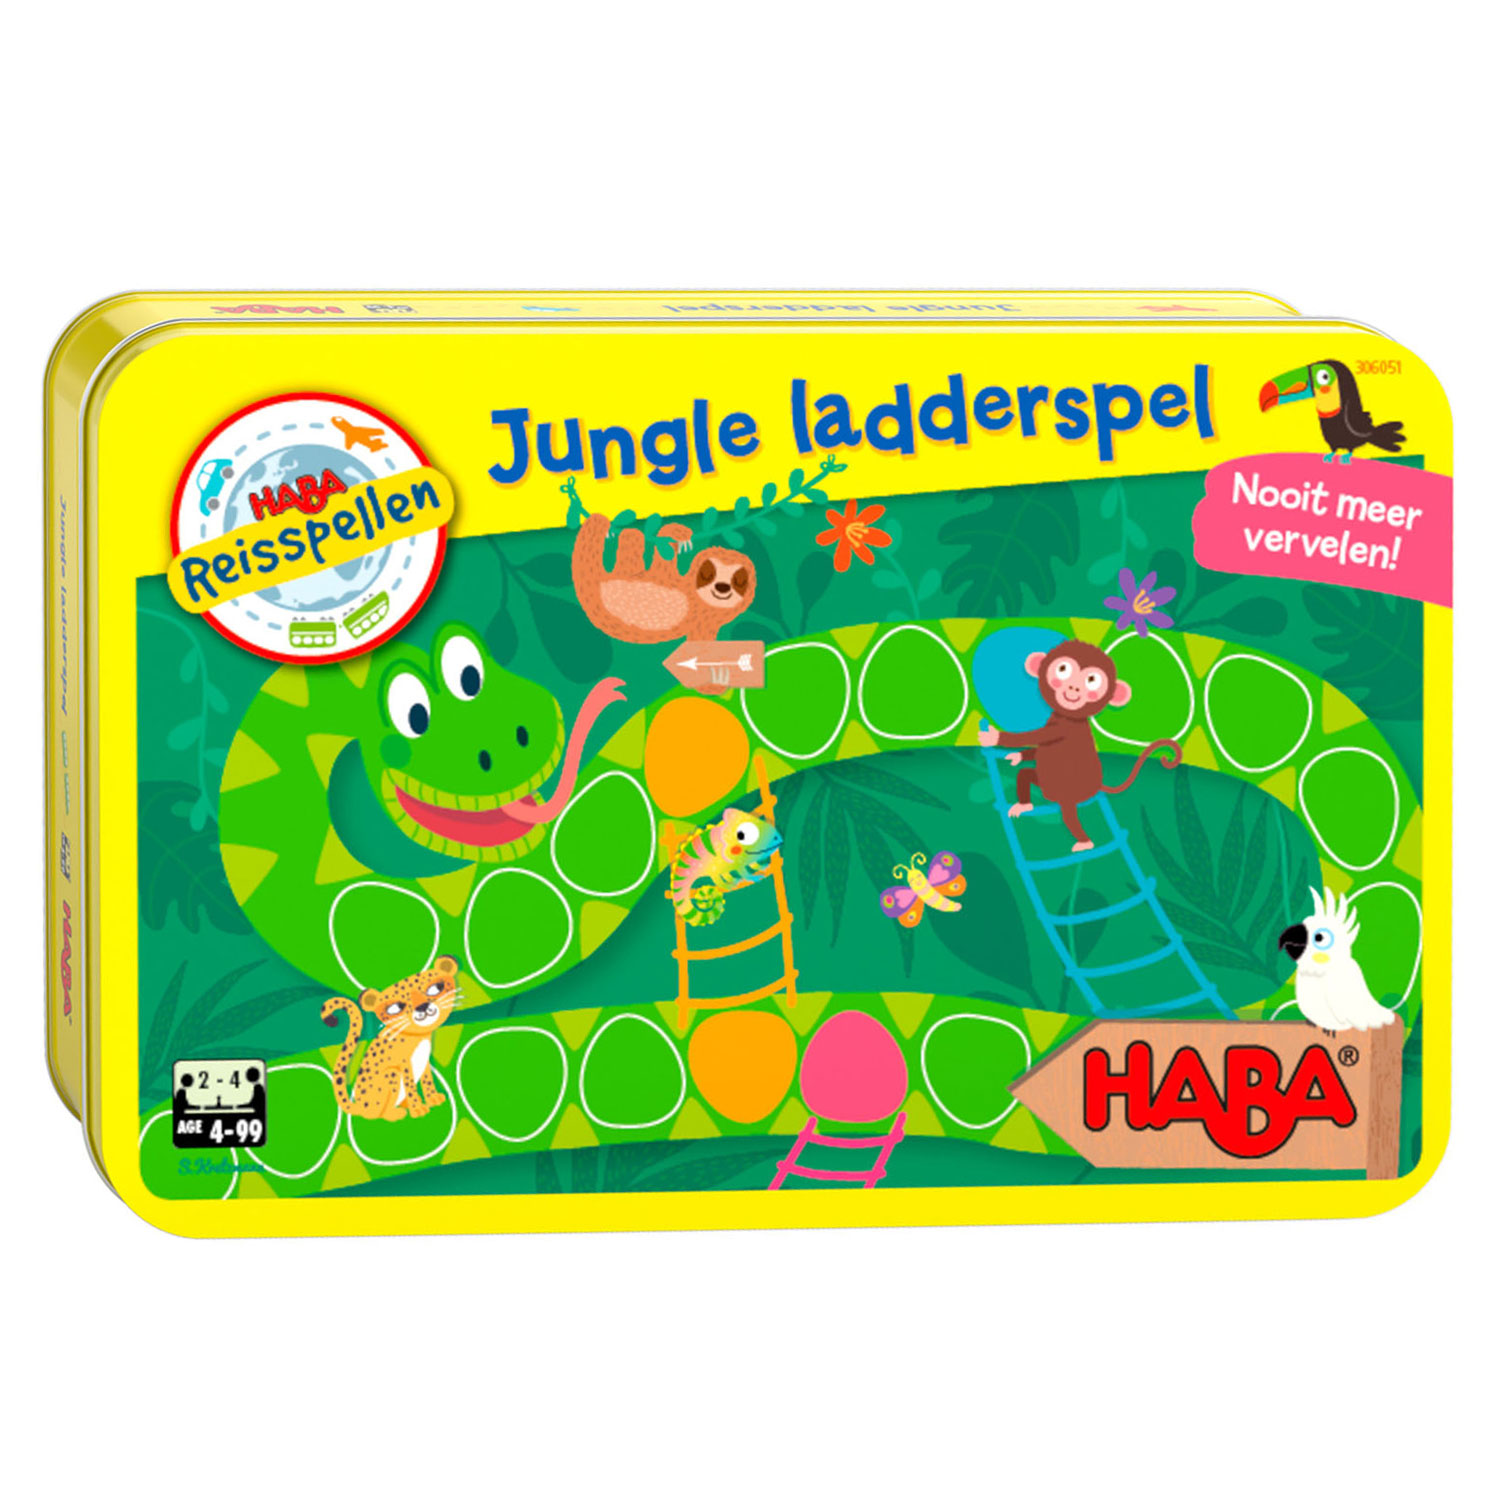 Me Vestiging willekeurig Haba Reisspel - Jungle Ladderspel online kopen? | Lobbes Speelgoed